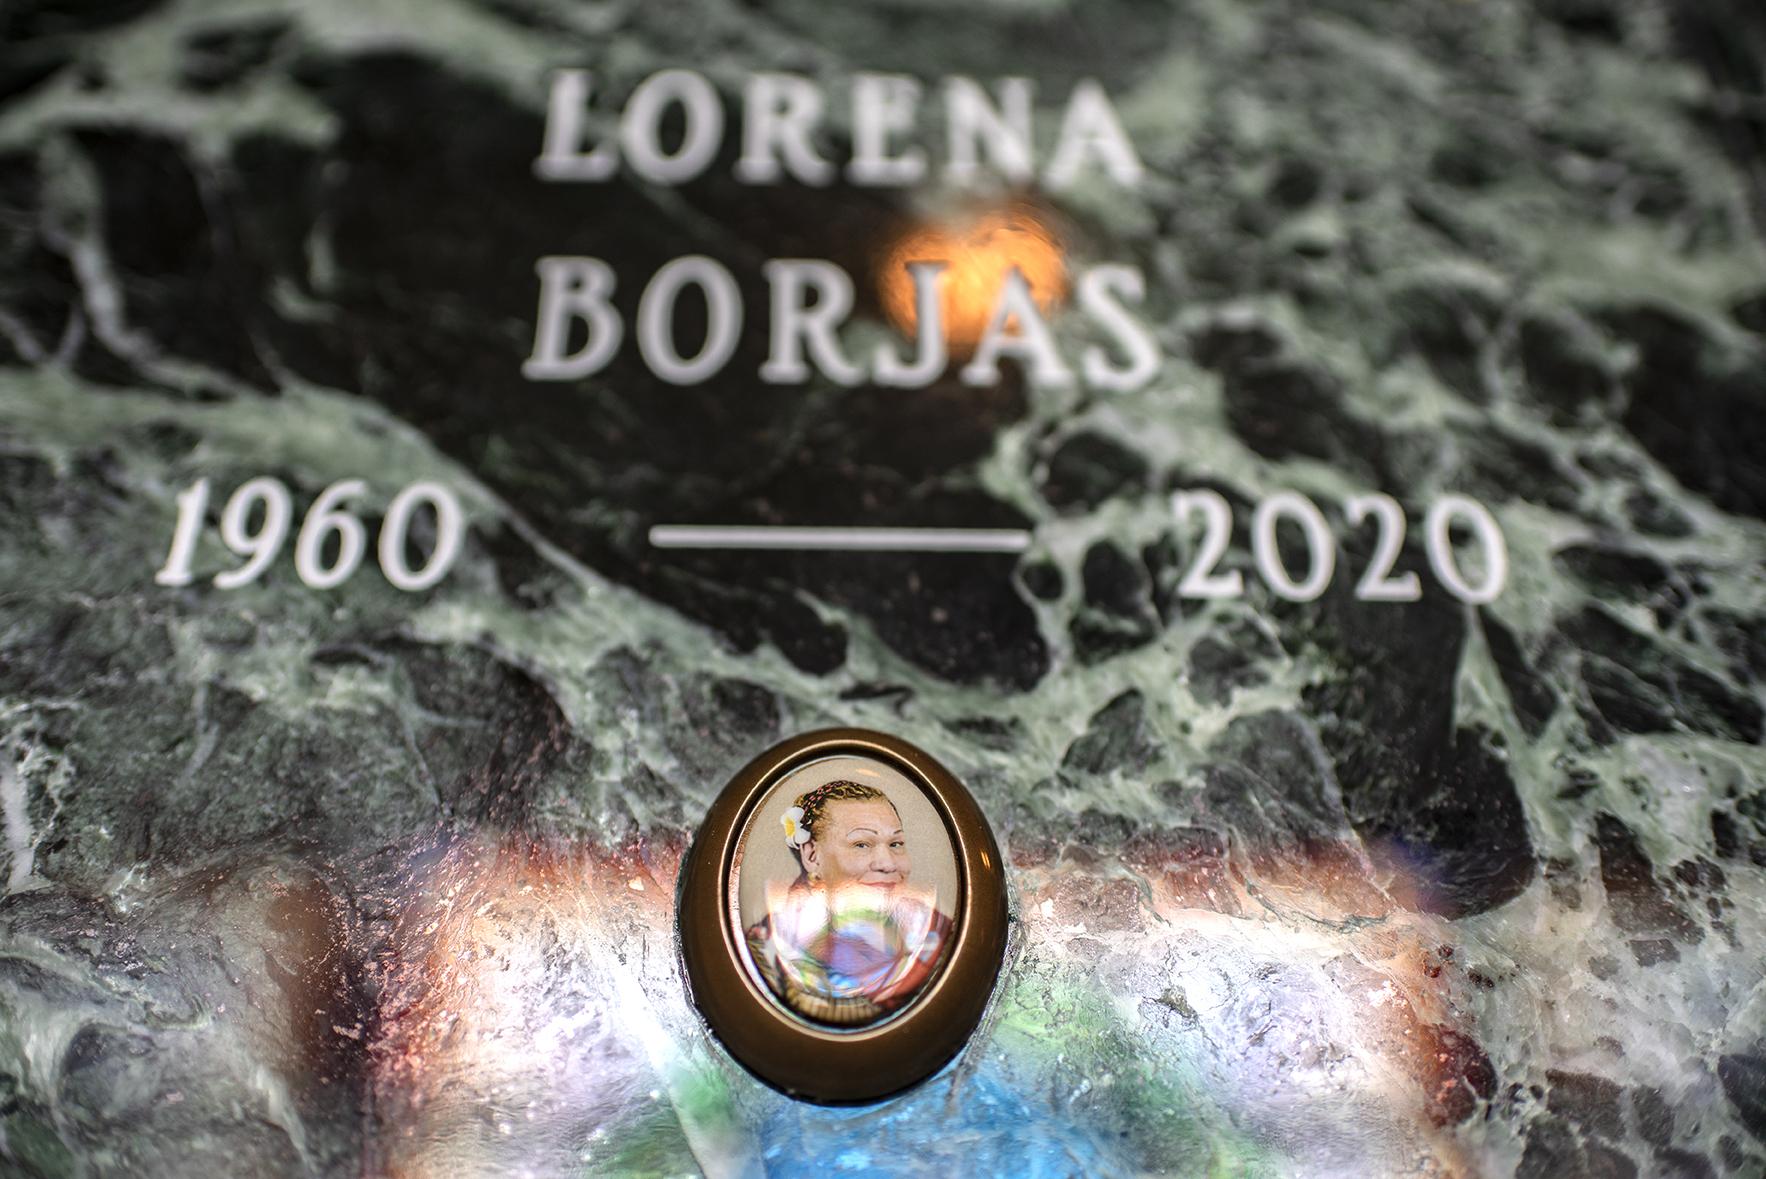  Detail of Lorena Borjas gravestone at the St. John Cemetery in New York City. 